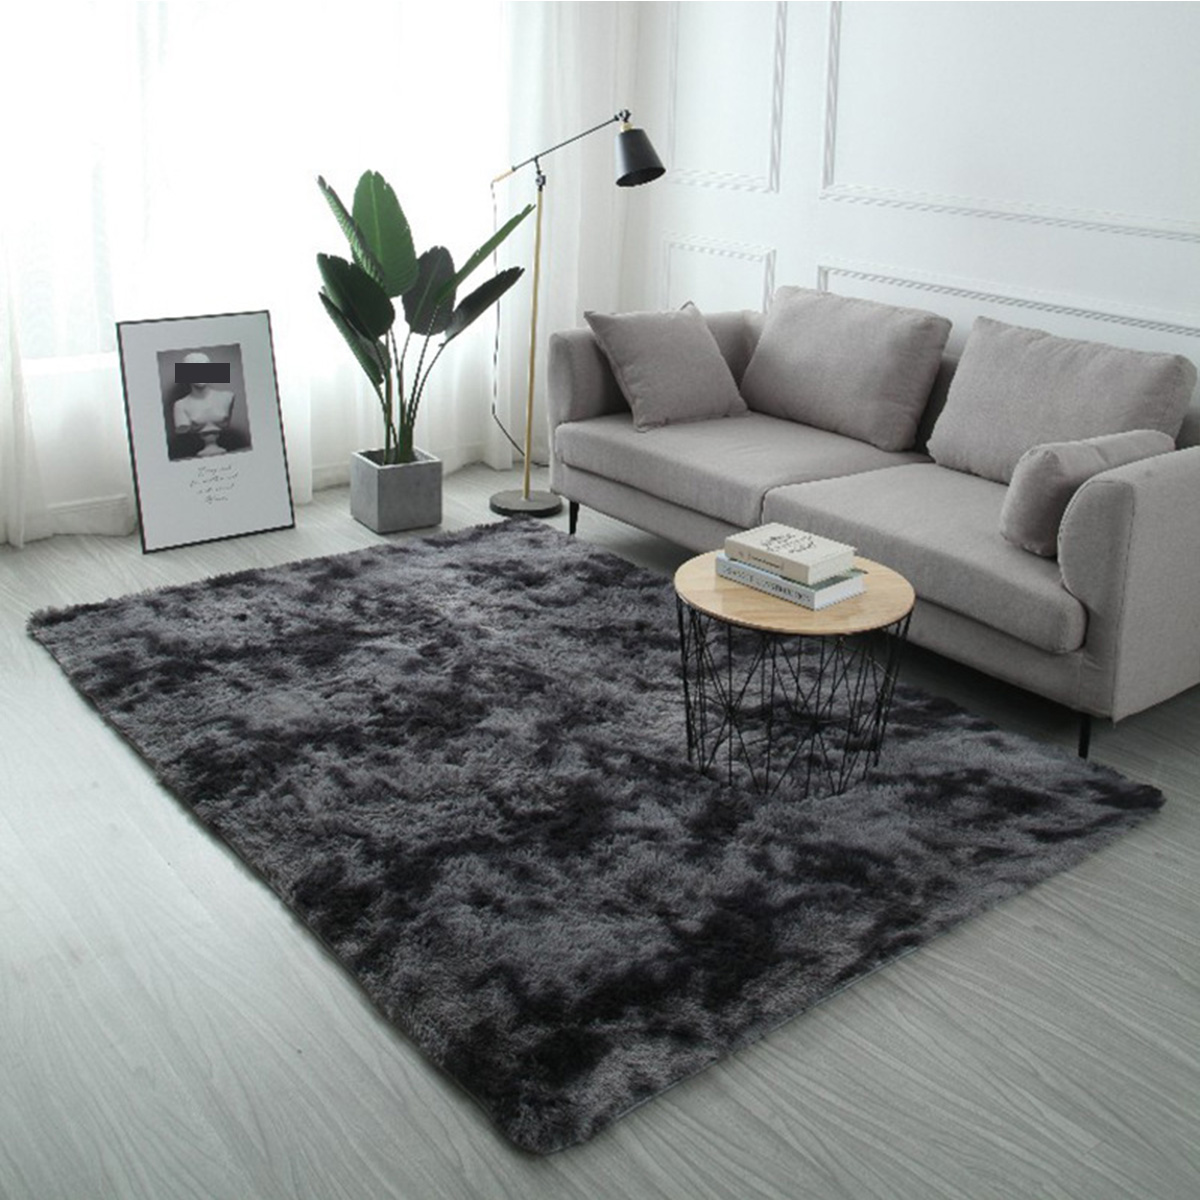 3-SIZE-Pad-Dyed-Gradient-Silk-Wool-Carpet-Super-Soft-Rug-Indoor-Modern-Shag-Area-Rug-Silky-Rugs-Bedr-1602690-2